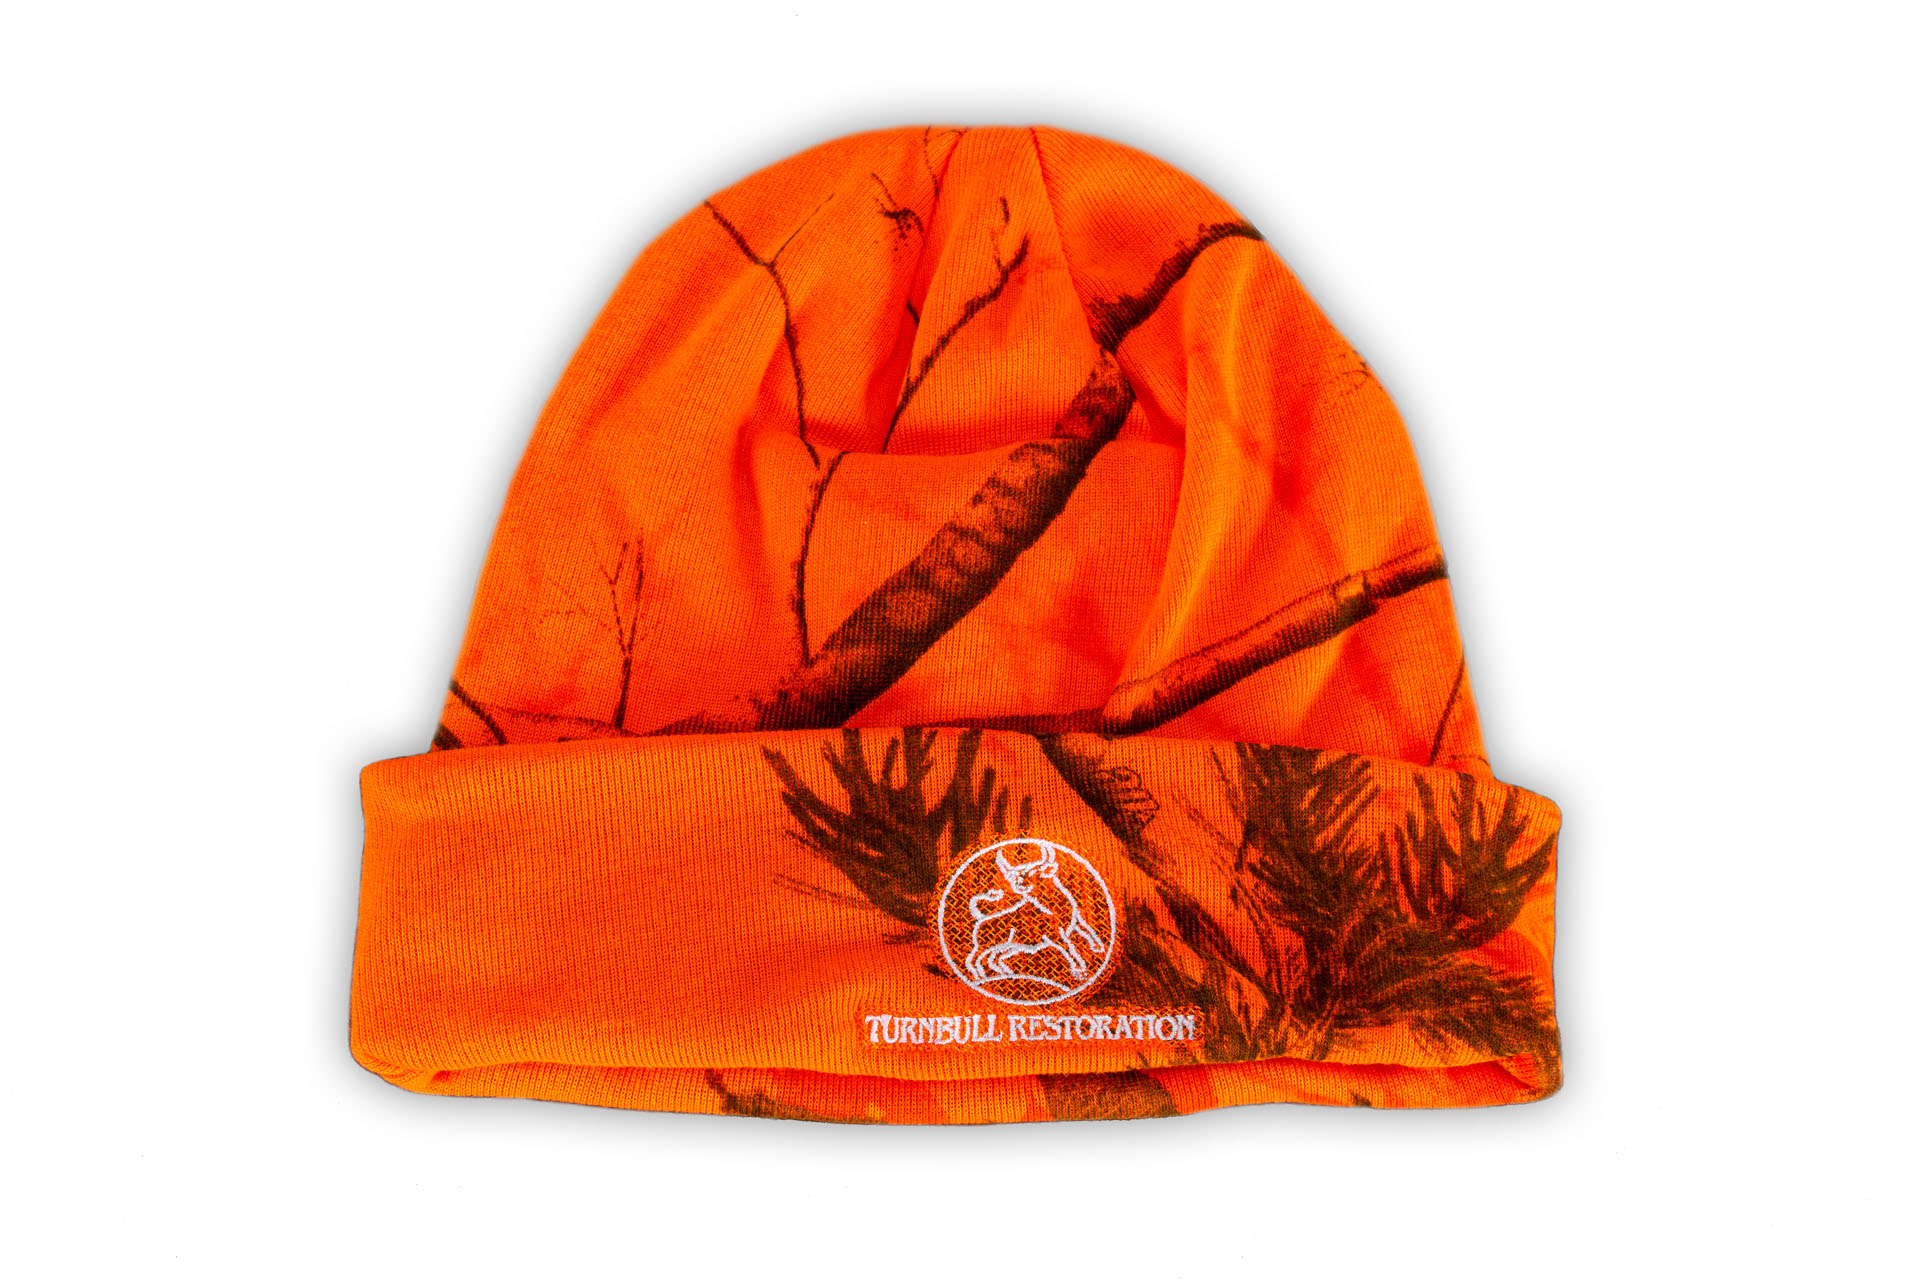 Photo of a Turnbull Restoration knit hat, printed in Realtree AP Blaze Orange camo pattern